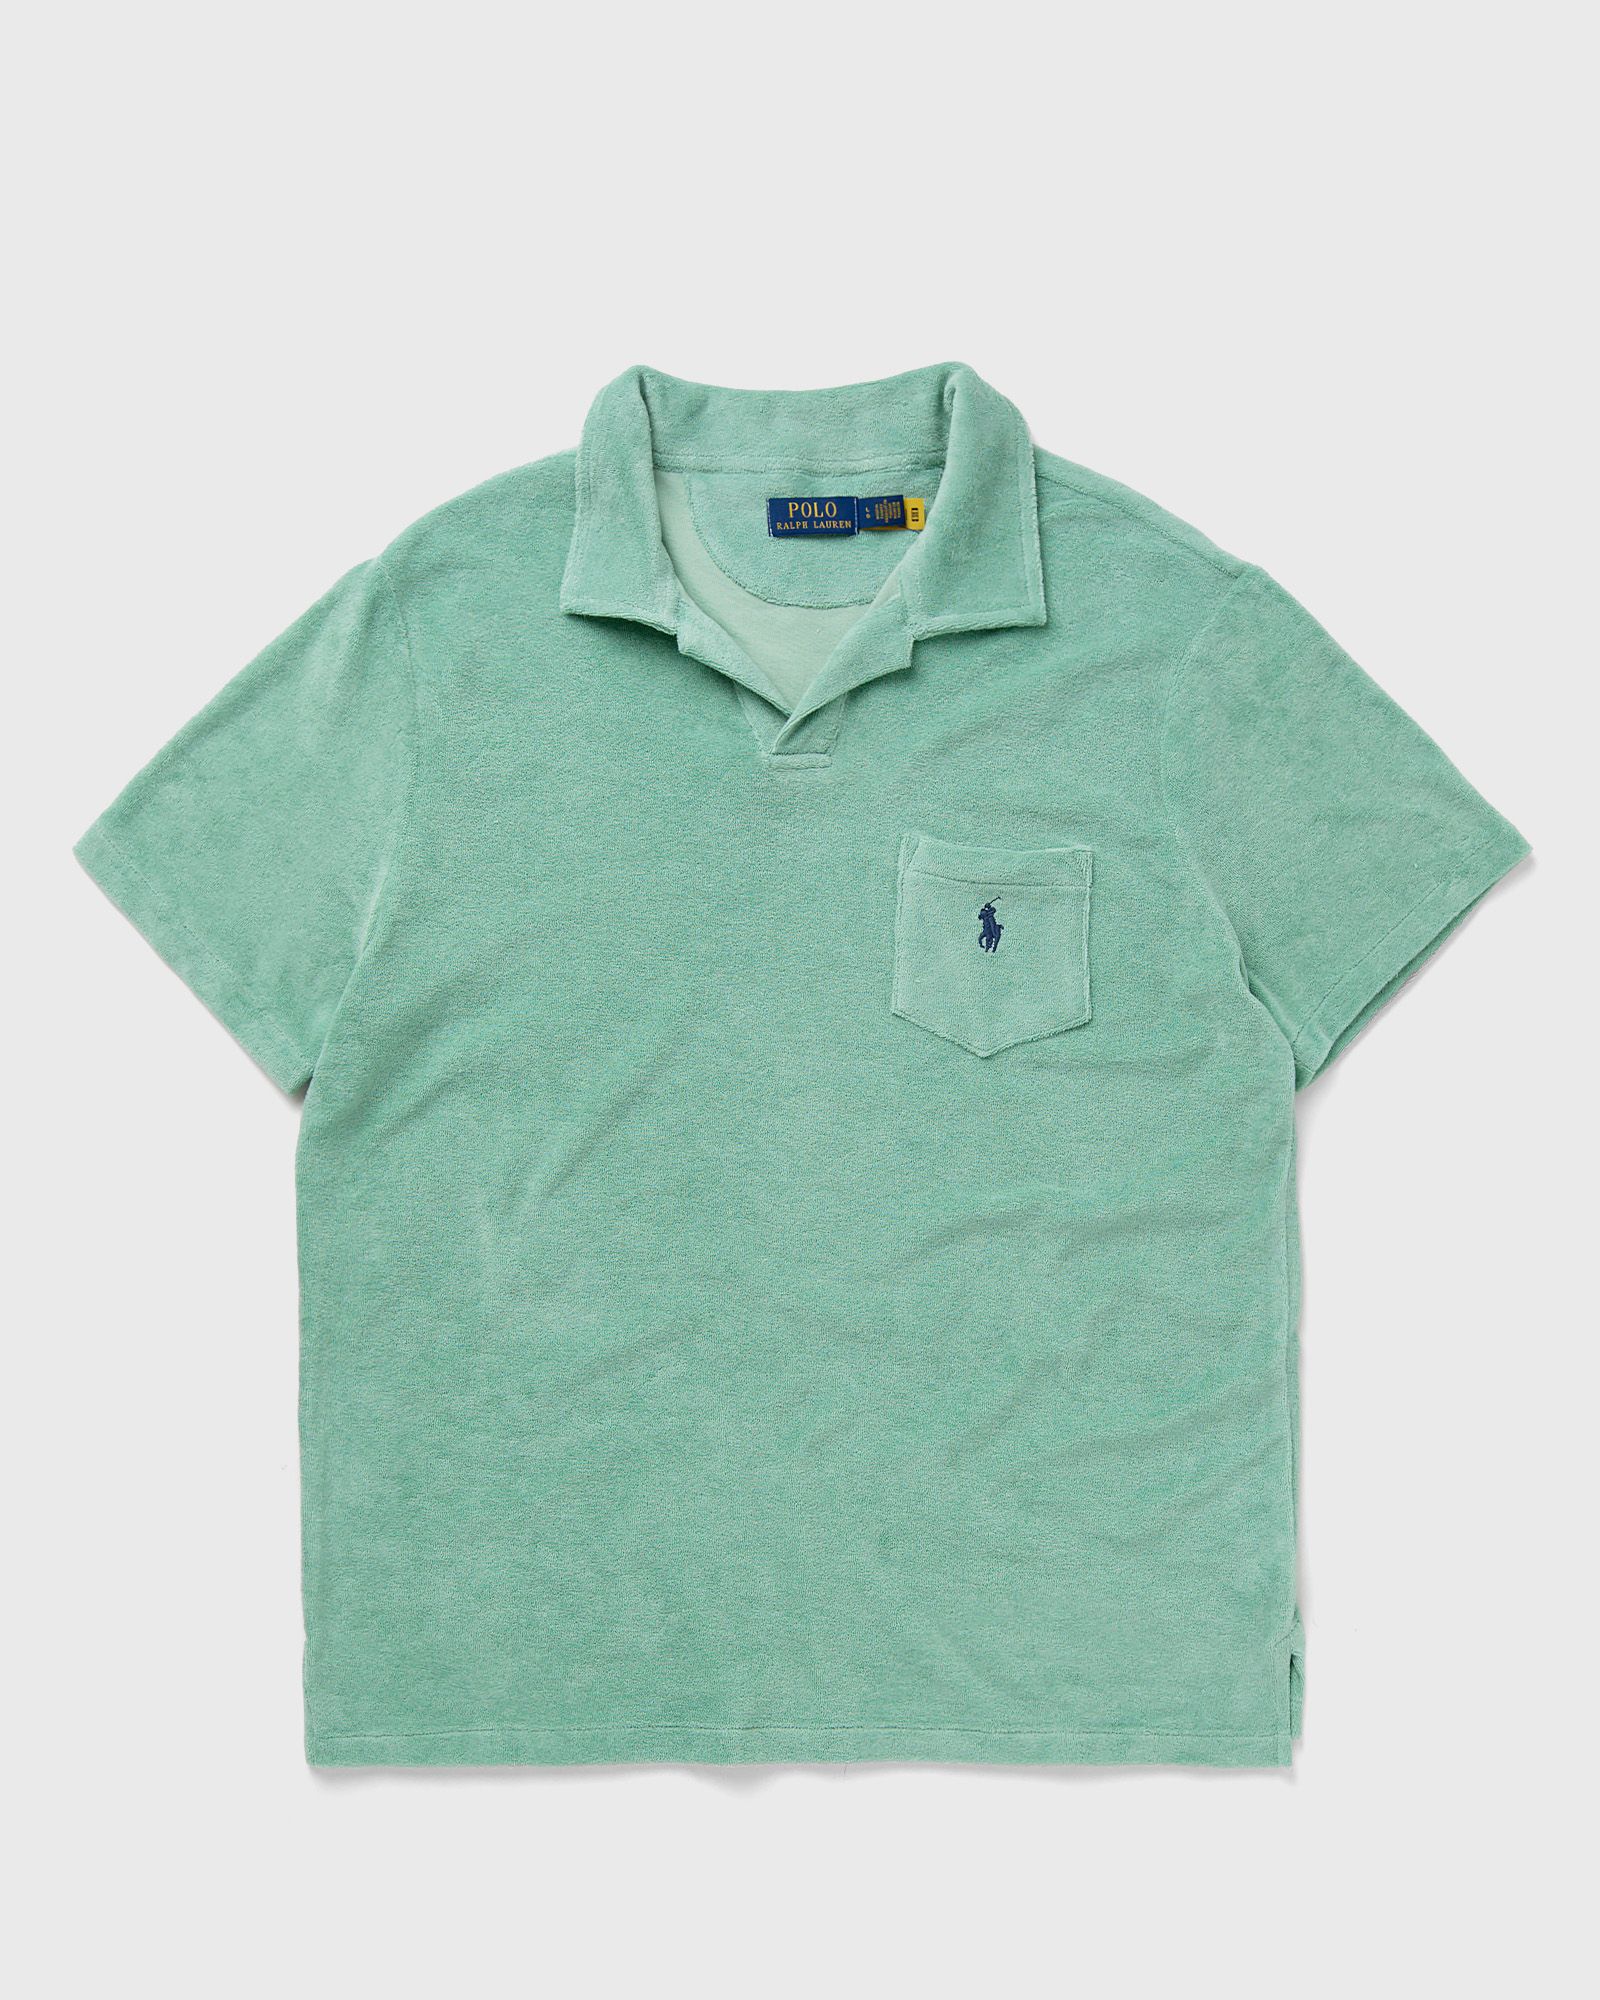 Polo Ralph Lauren - short sleeve-polo shirt men polos green in größe:xxl